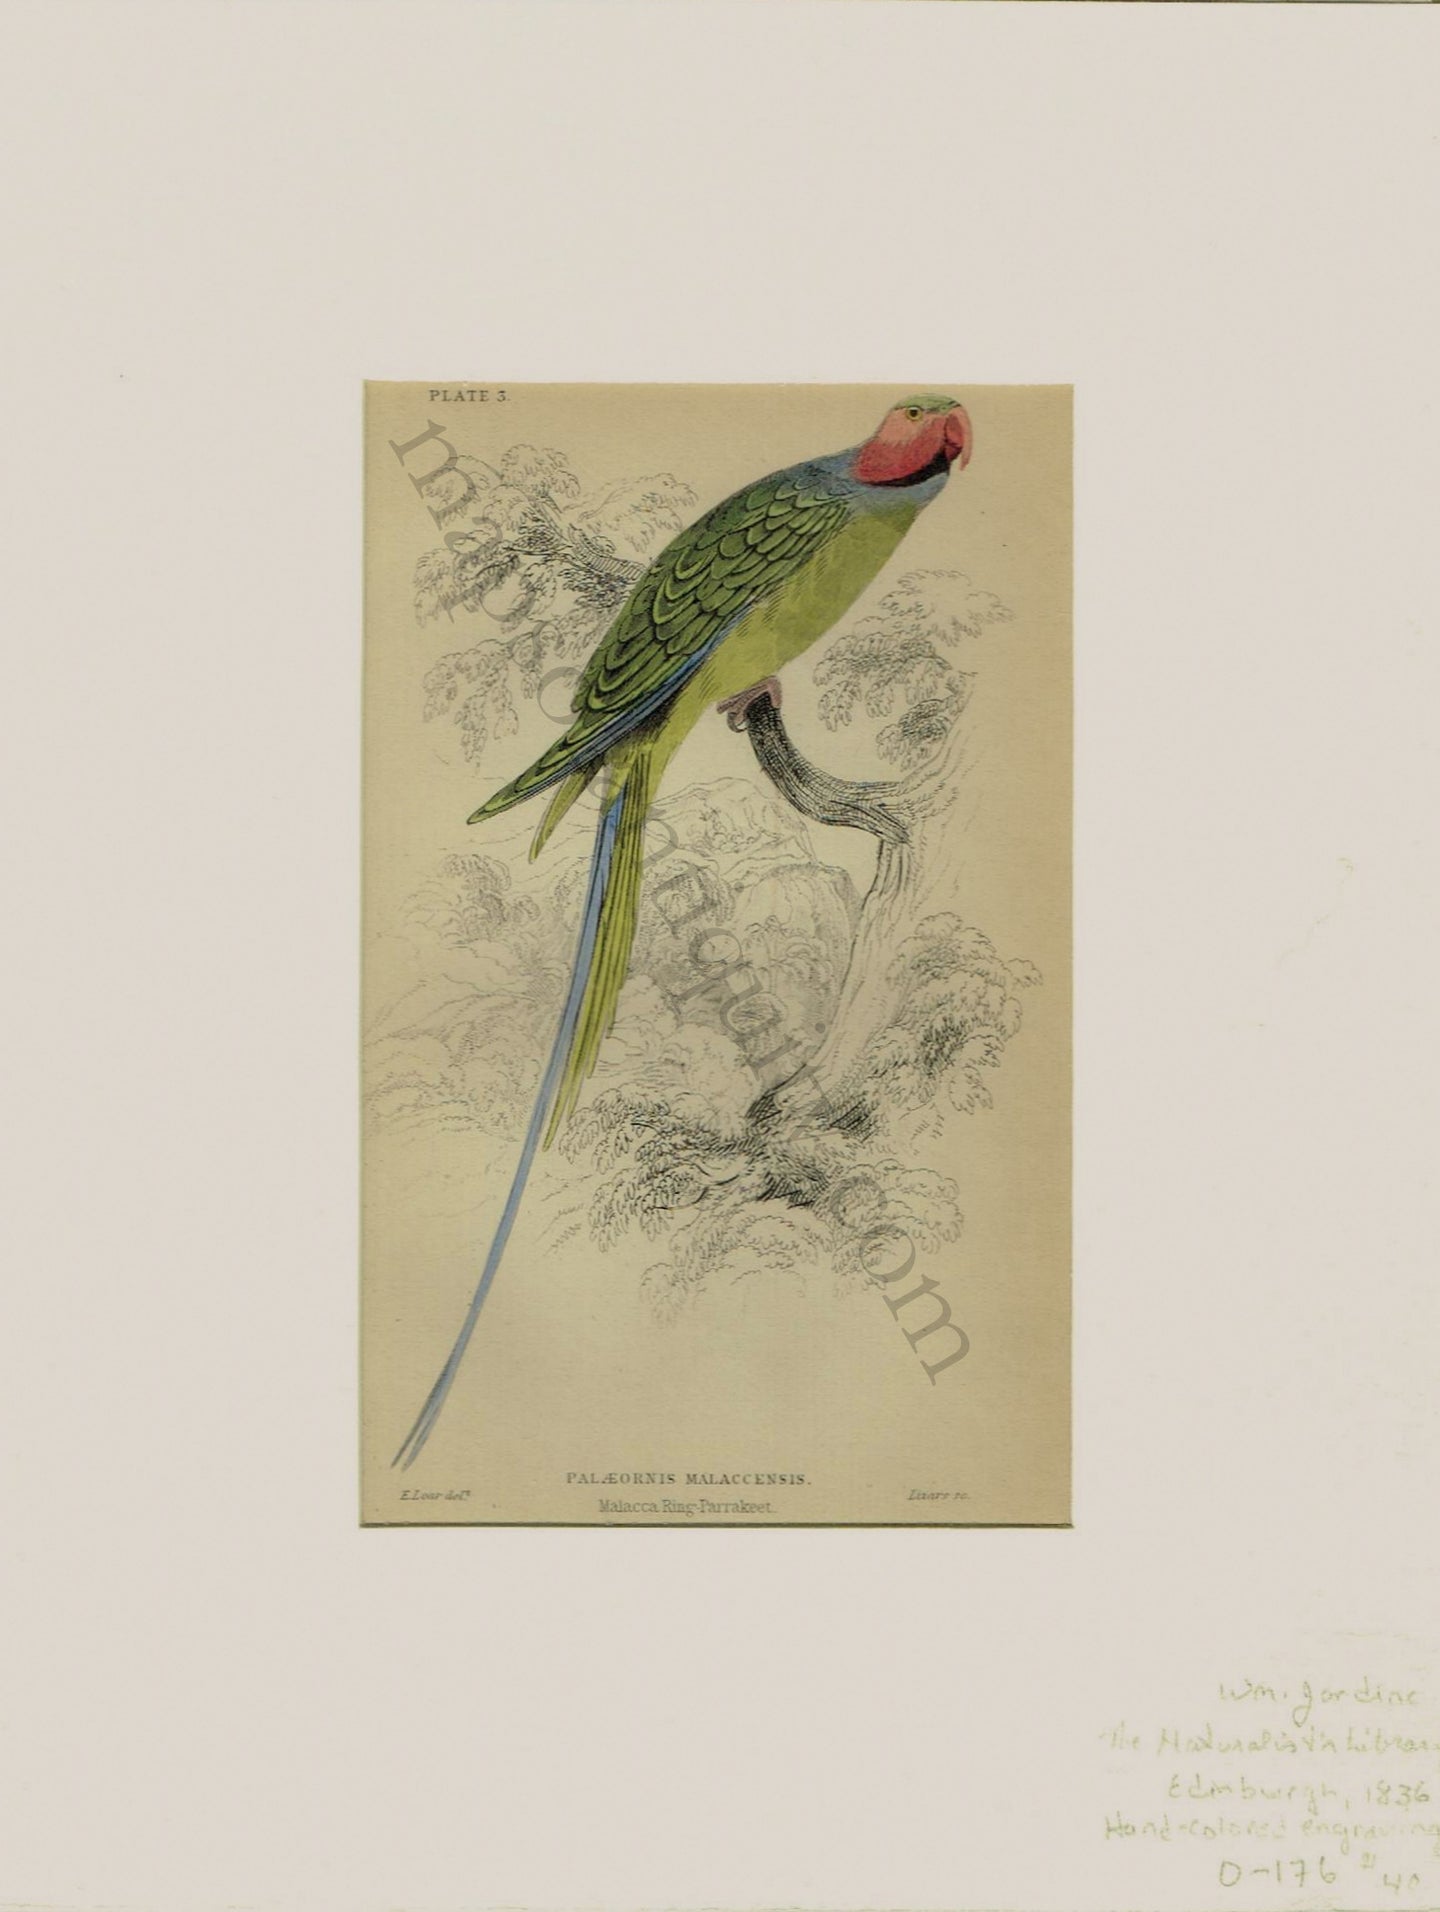 Antique-Print-Prints-Illustration-Illustrations-Natural-History-Palaeornis-Malaccensis-Malacca-Ring-Parrakeet-Parakeet-Bird-Birds